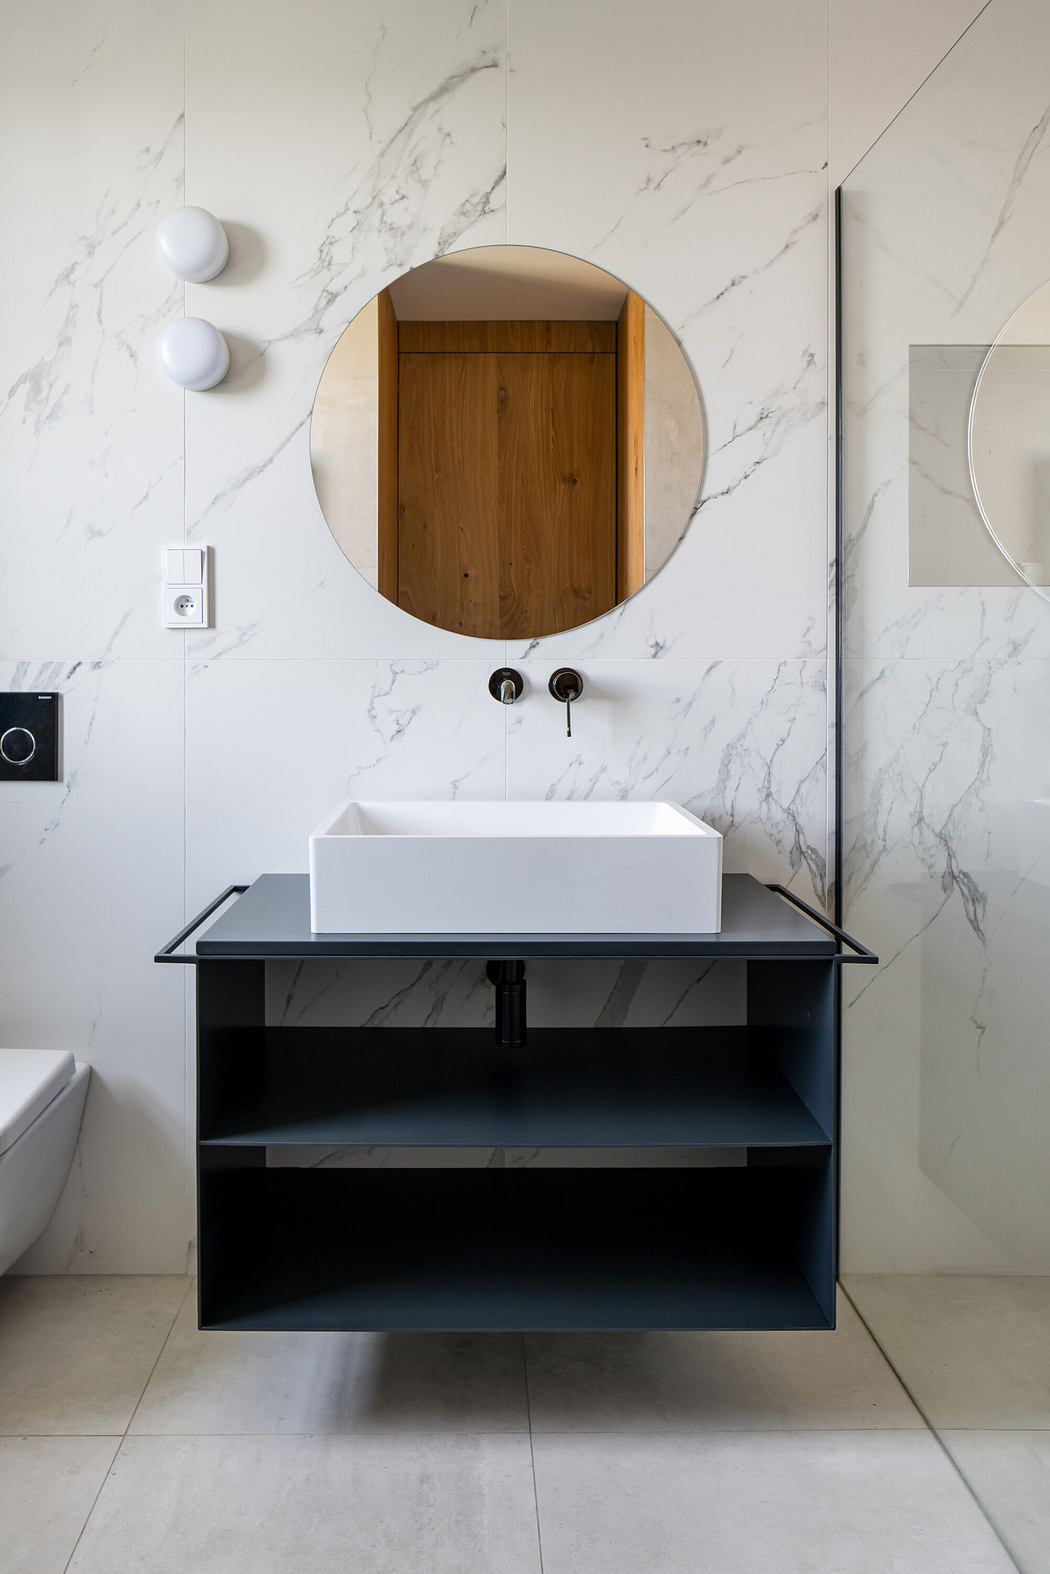 Modern bathroom with a round mirror, vessel sink, and black vanity.